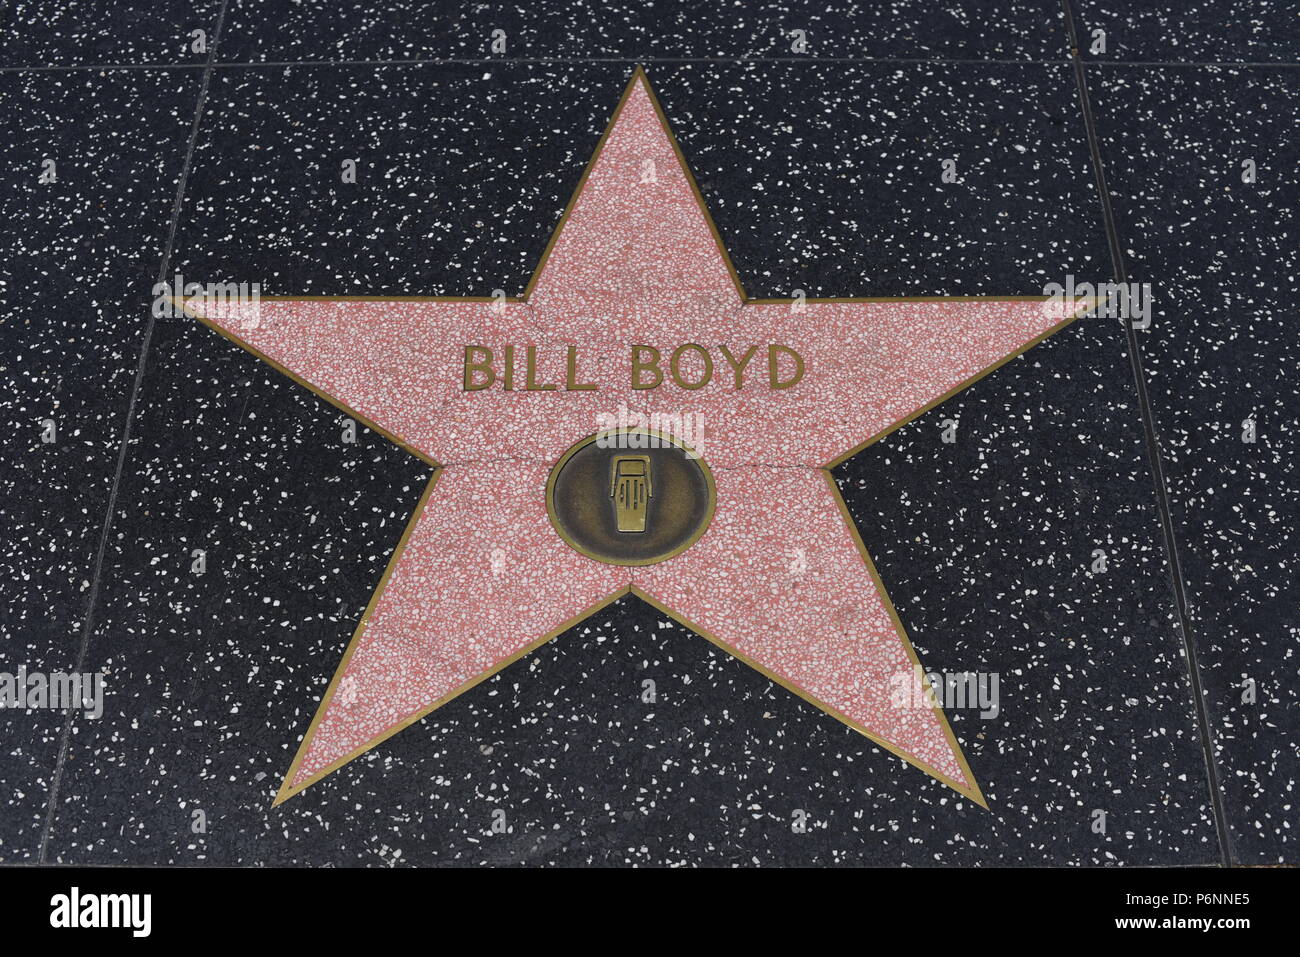 HOLLYWOOD, CA - 29 Giugno: Bill Boyd stella sulla Hollywood Walk of Fame in Hollywood, la California il 29 giugno 2018. Foto Stock